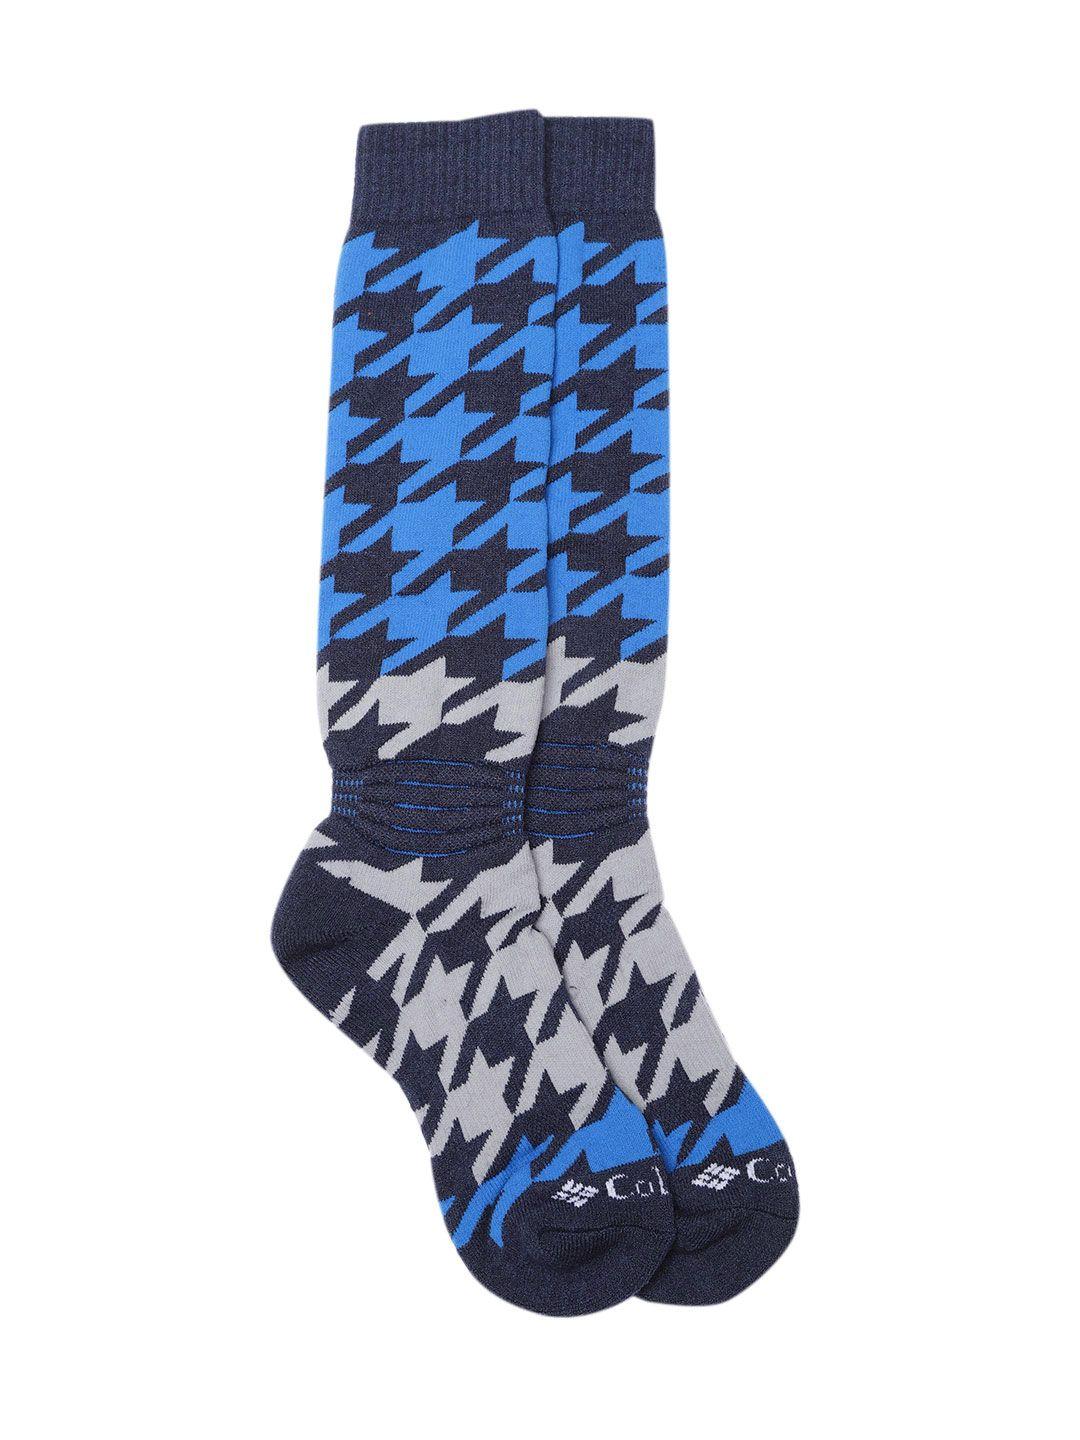 columbia unisex navy blue & grey patterned ankle length socks